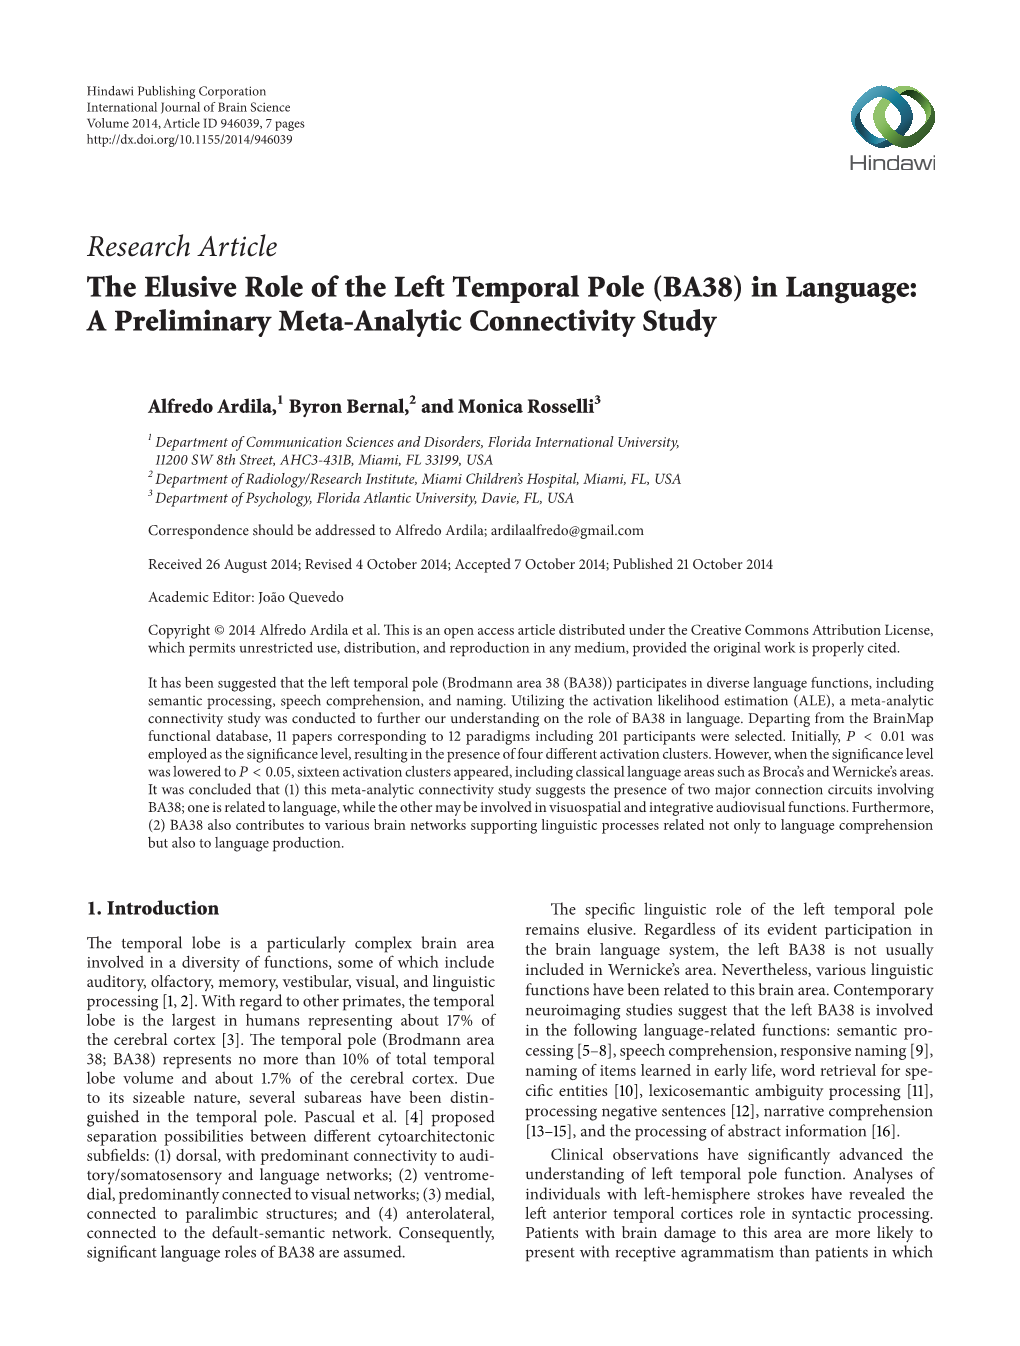 2014 Ardila Et Al. the Elusive Role of the Left Temporal Pole (BA38)